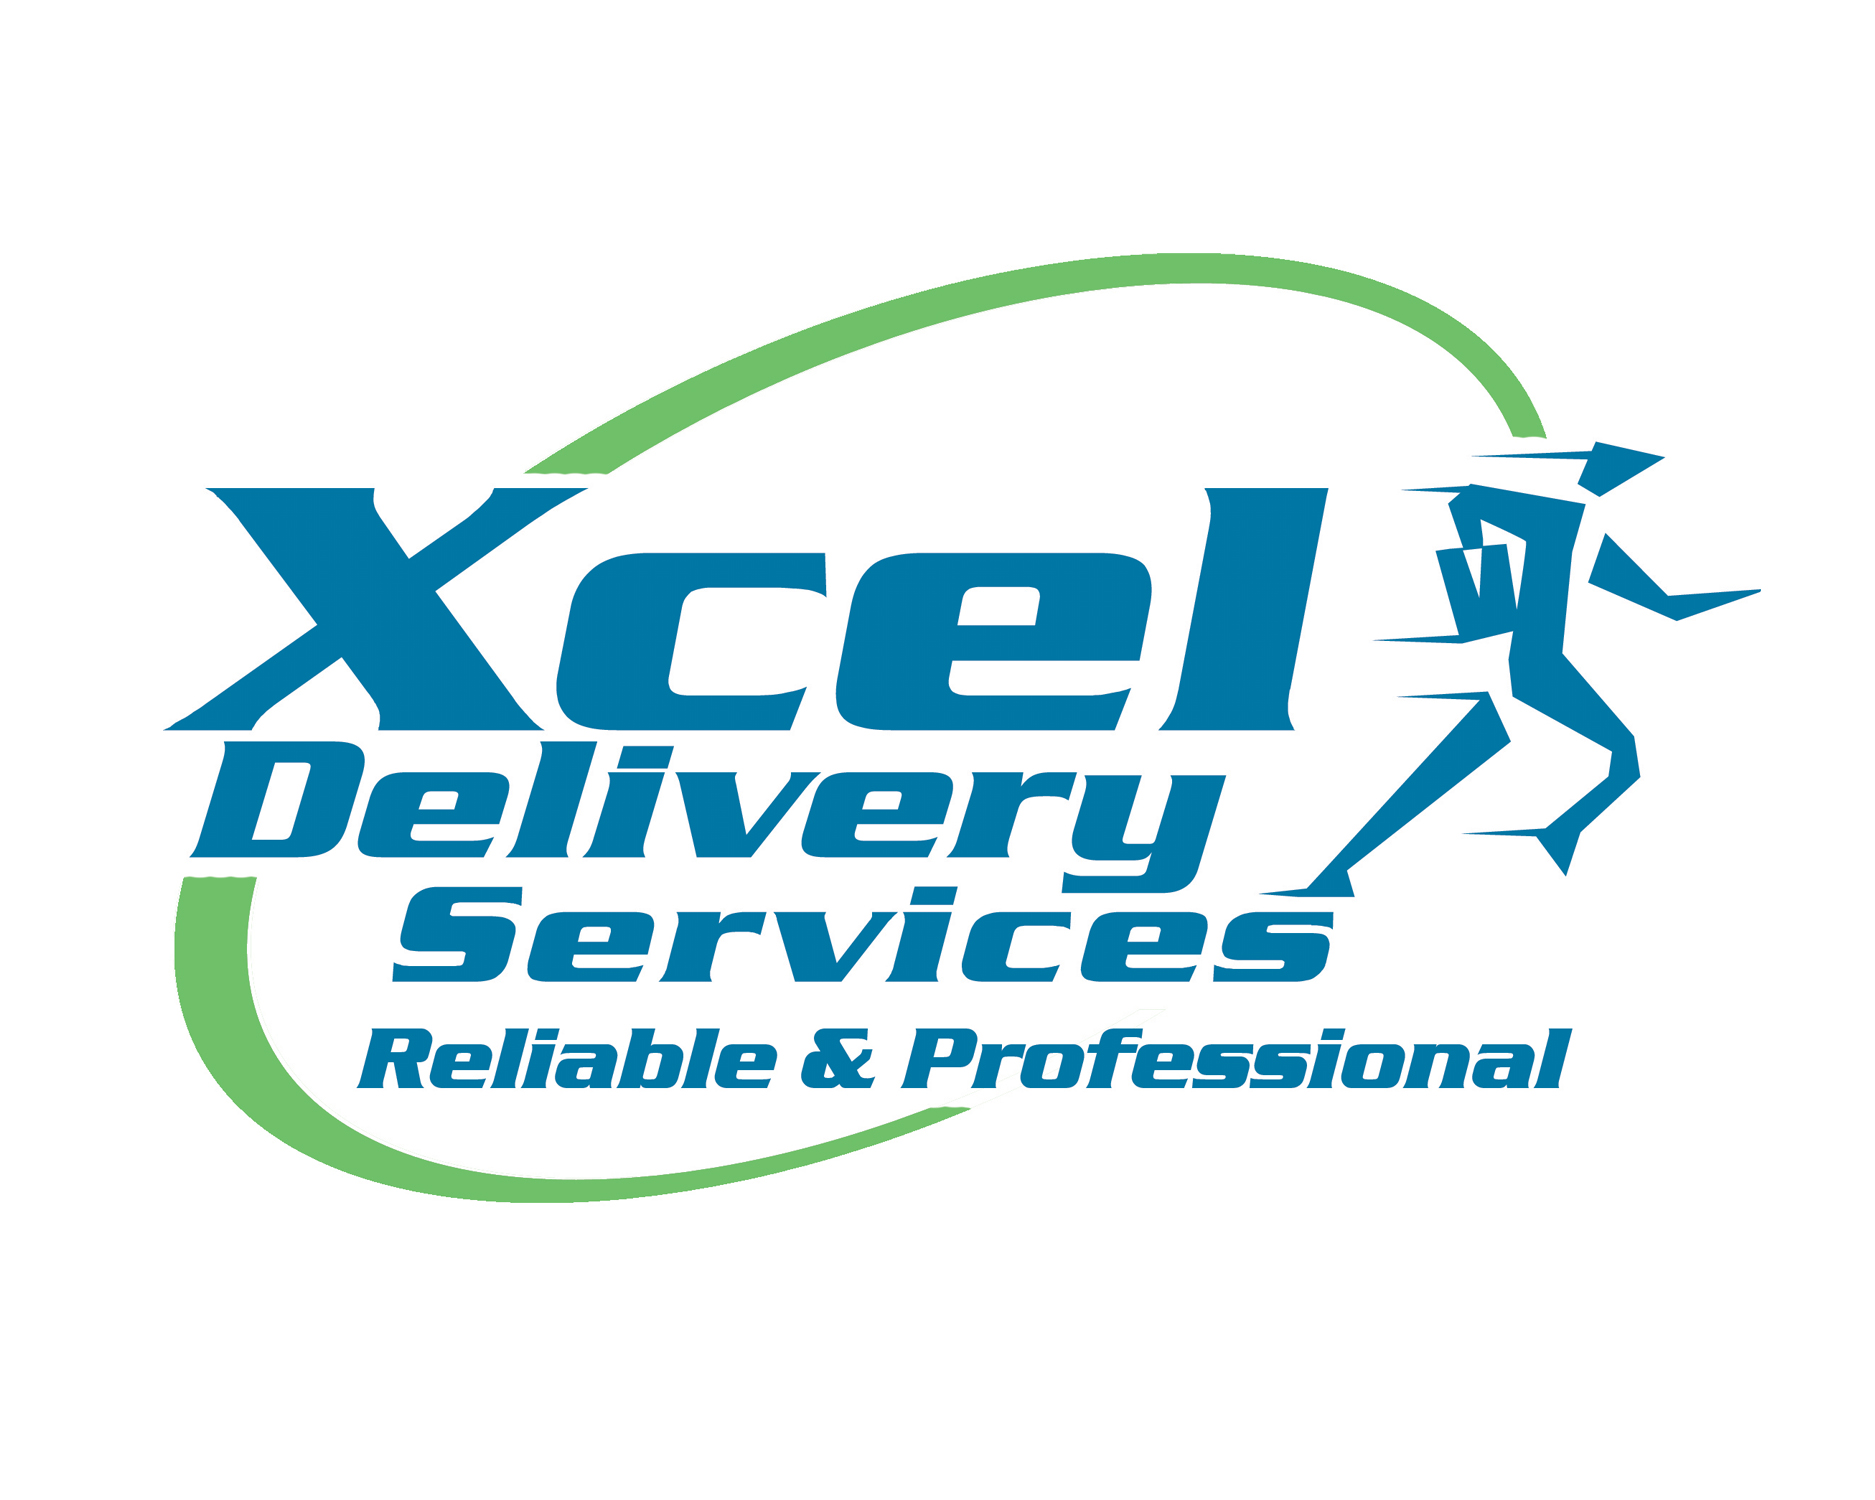 Courier Service Logo